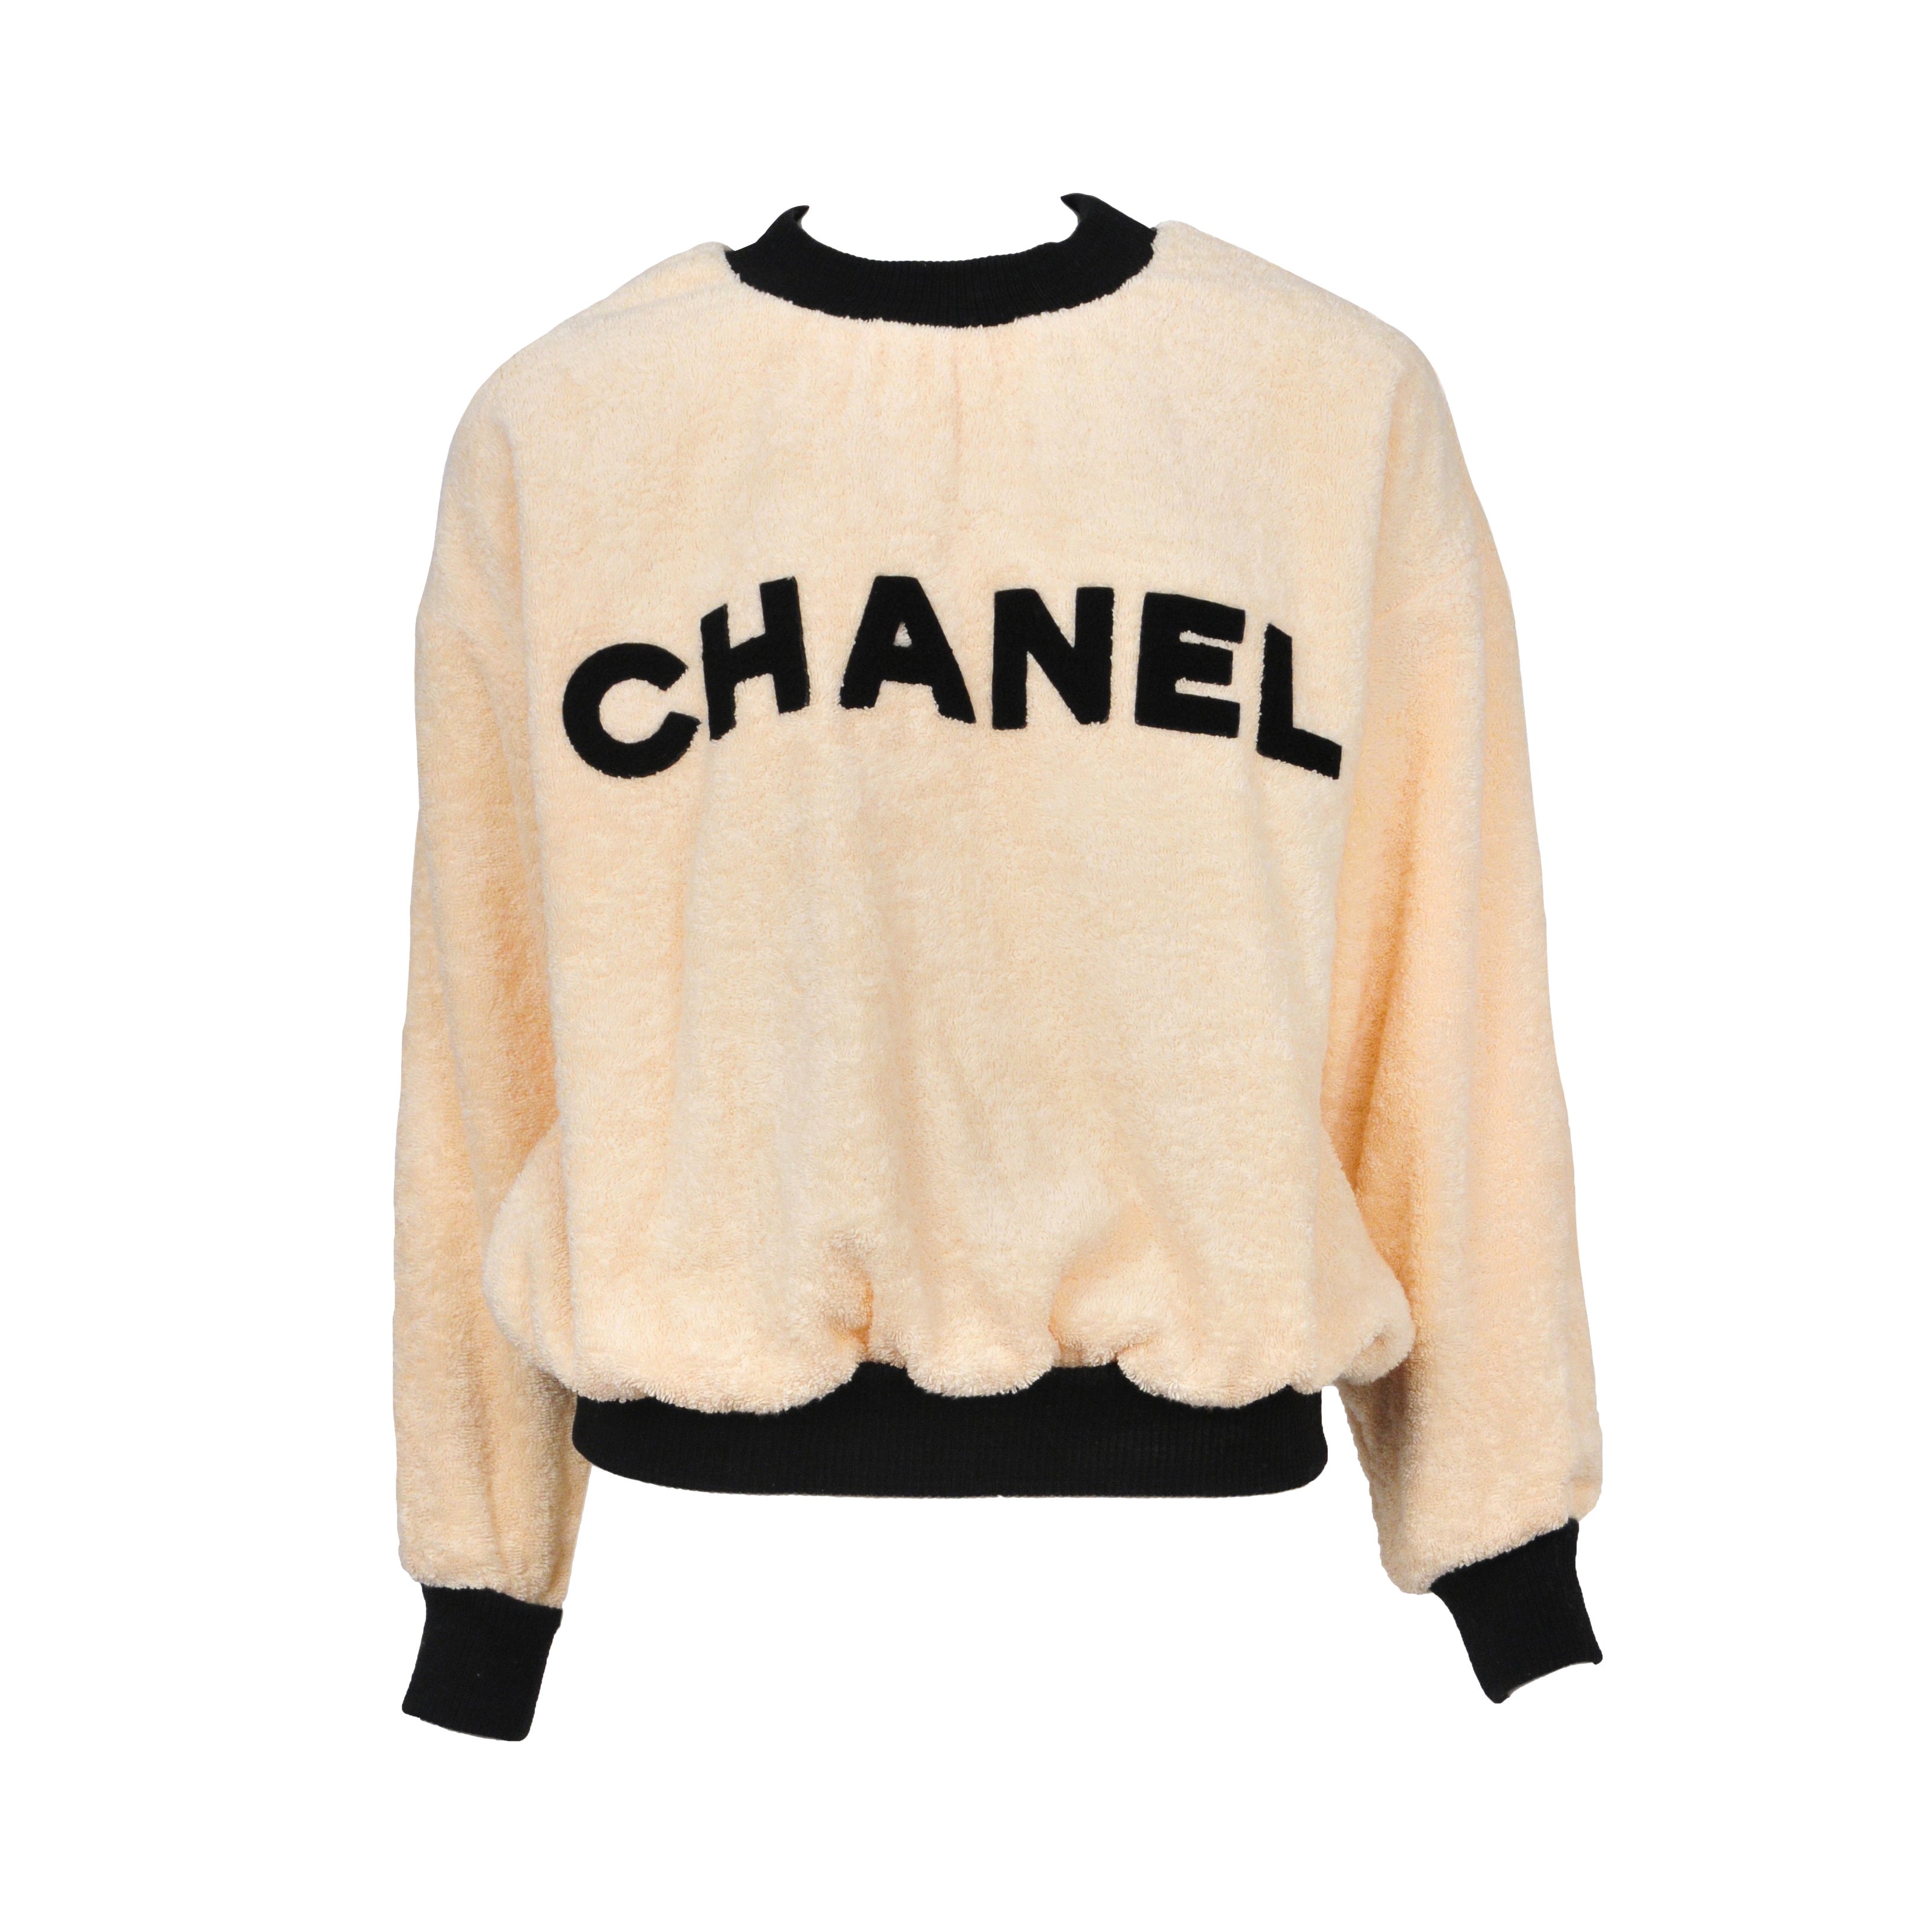 Chanel Vintage Sweatshirt - For Sale on 1stDibs